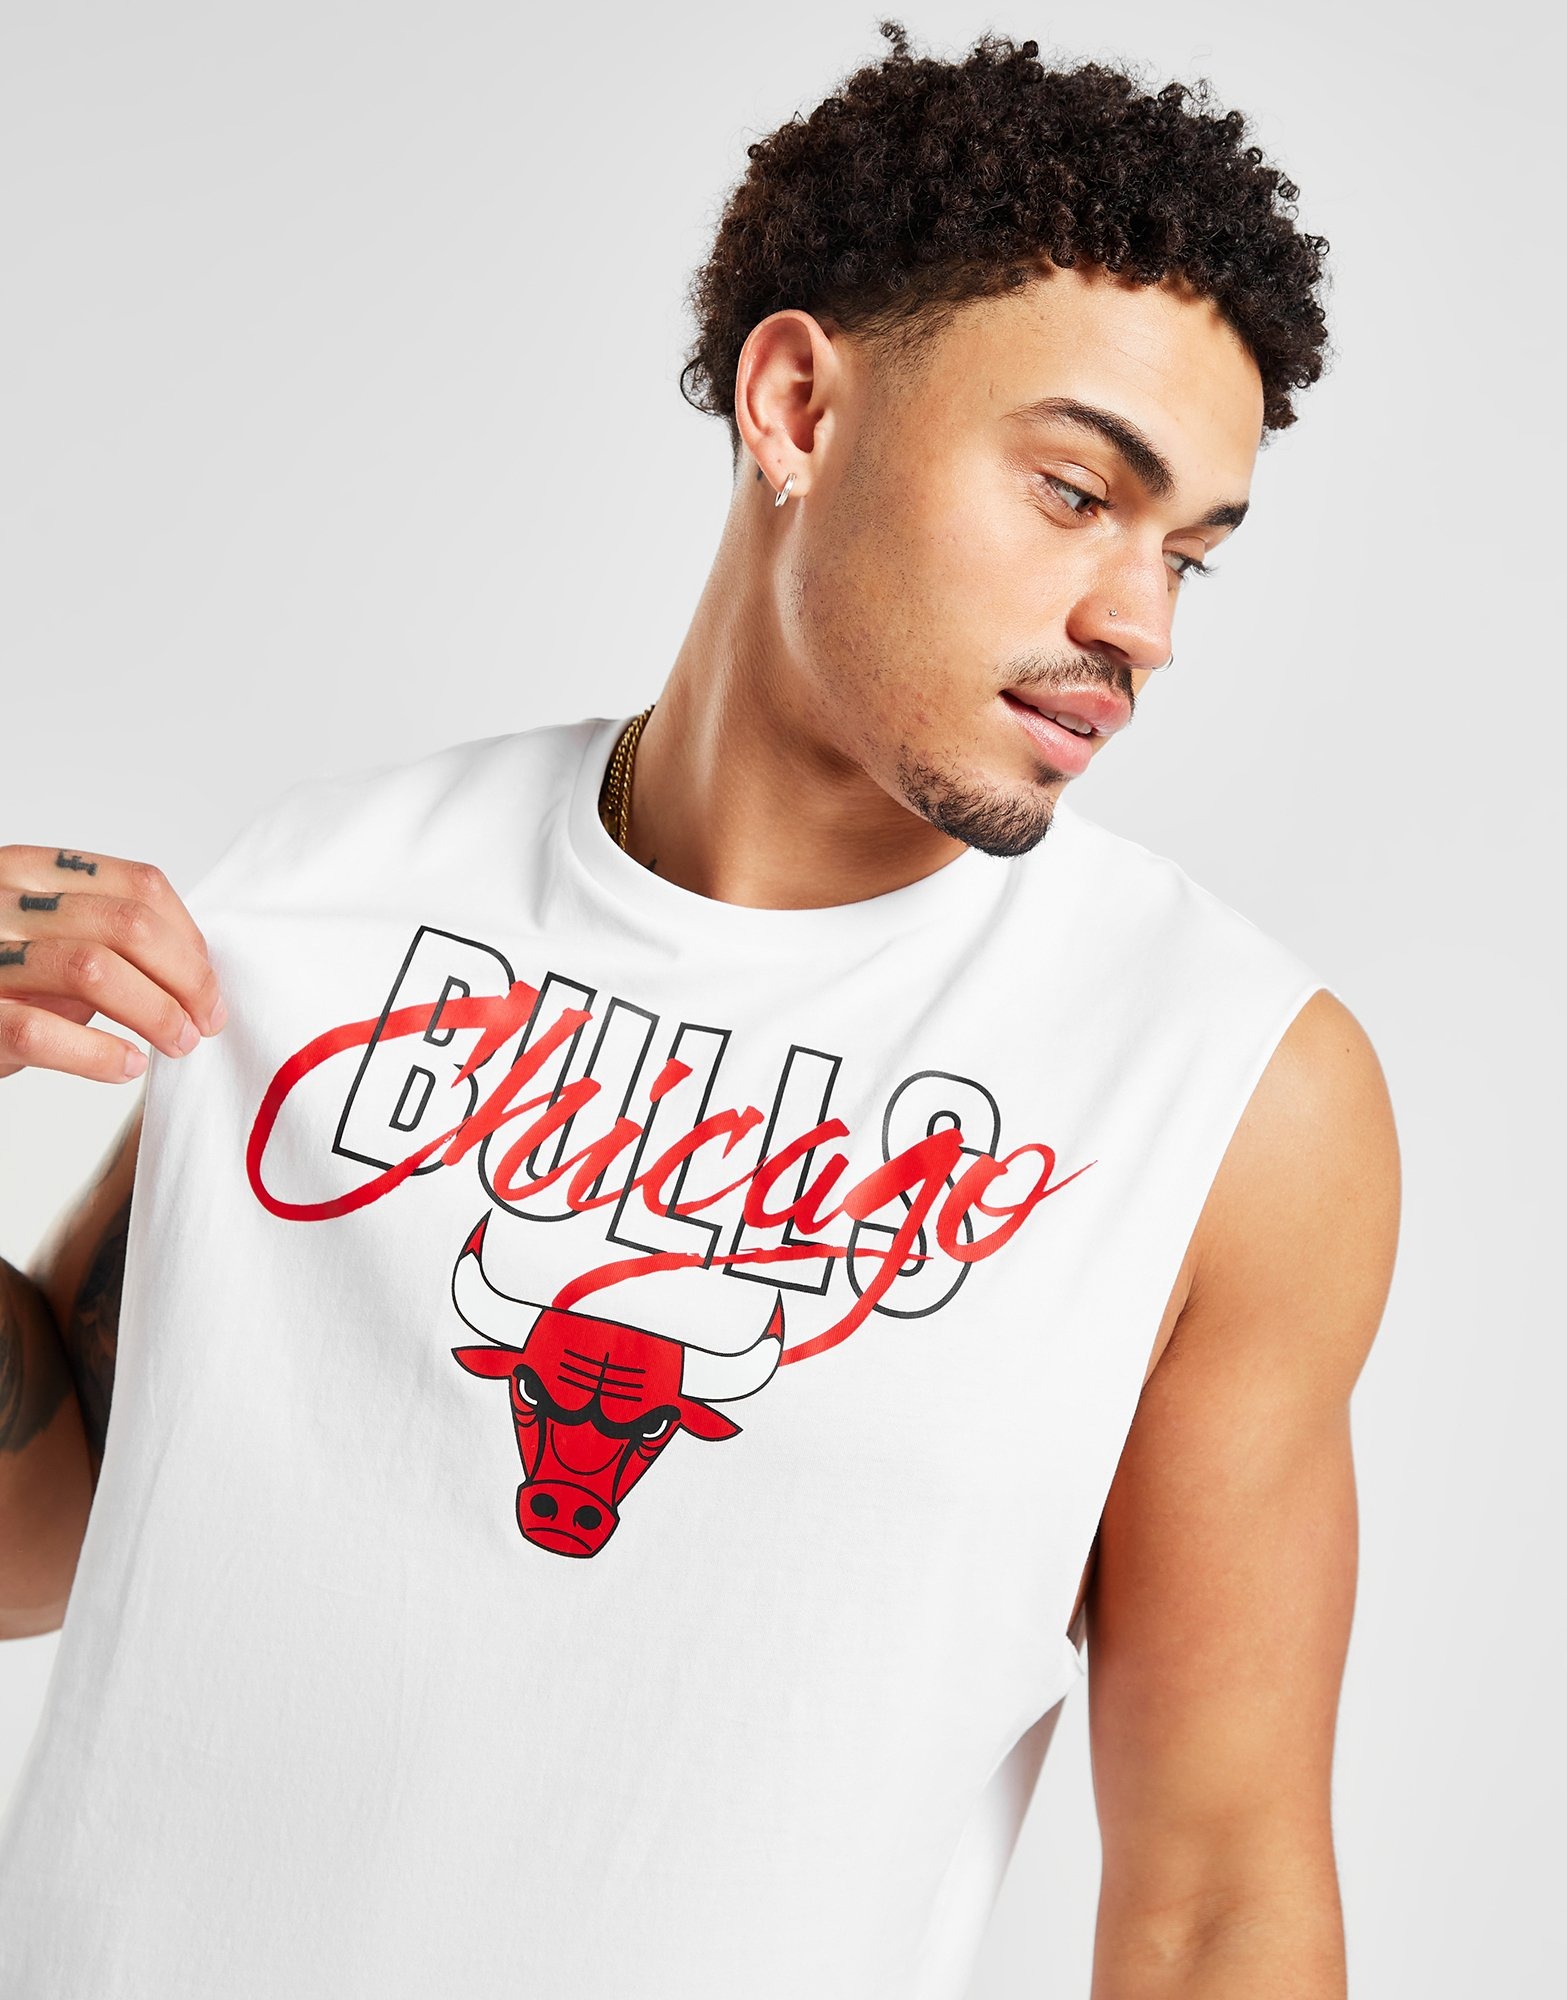 New Era NBA Chicago Bulls Script Full Zip Hoodie Size: XL